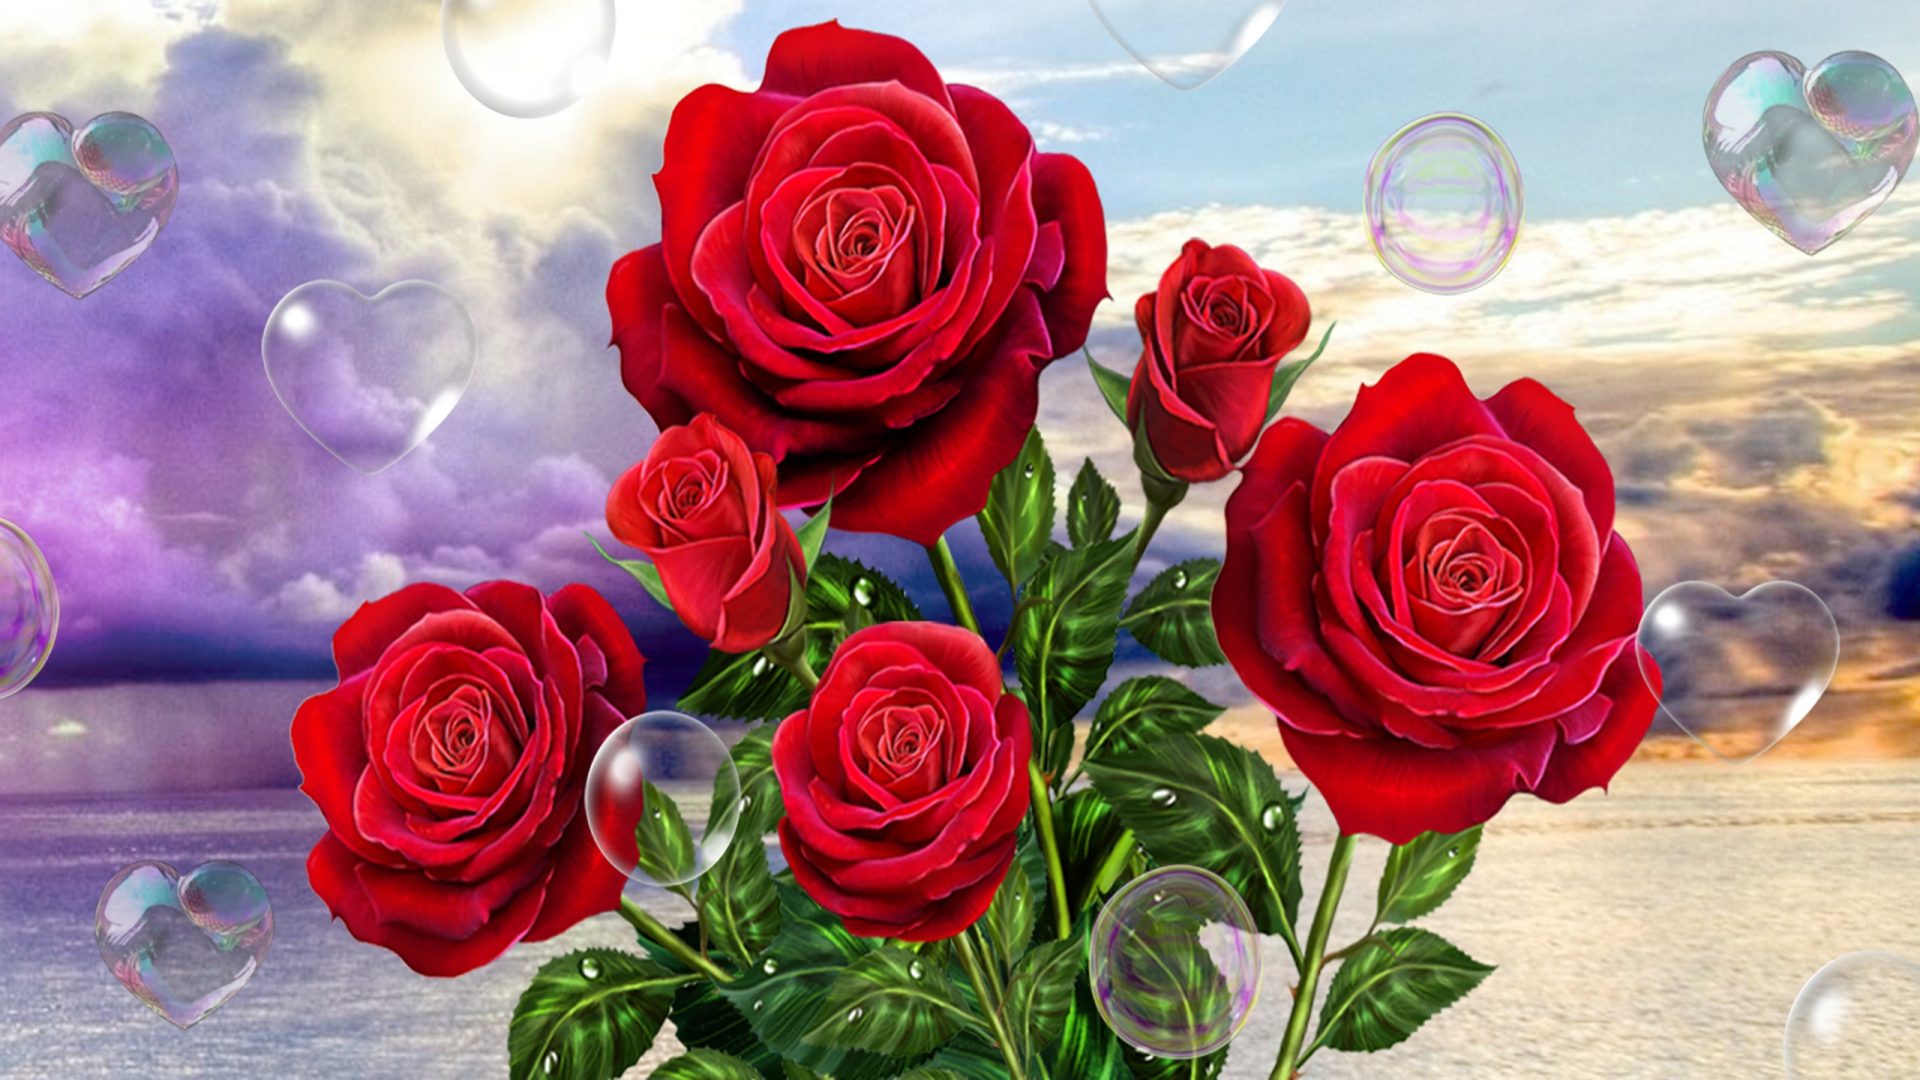 red rose live wallpaper free download,flower,garden roses,rose,red,rose family